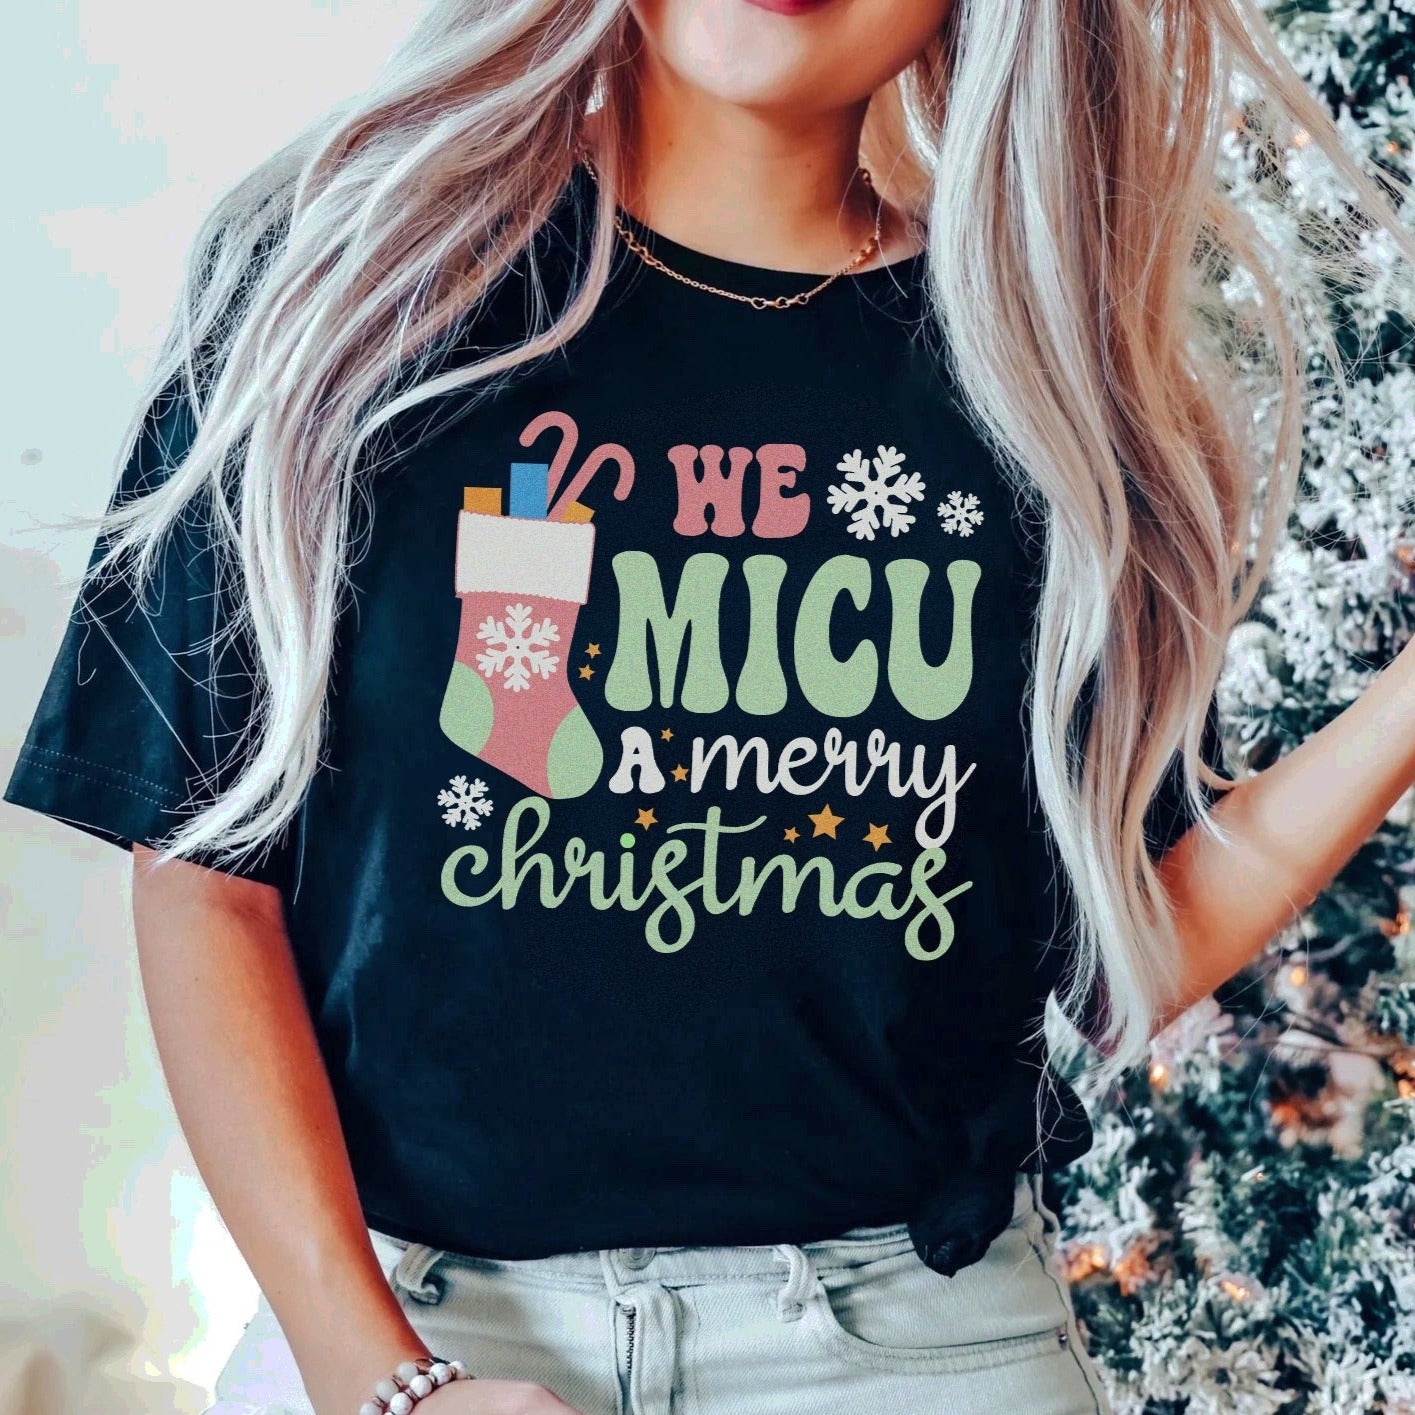 We MICU a Merry Christmas T-shirt